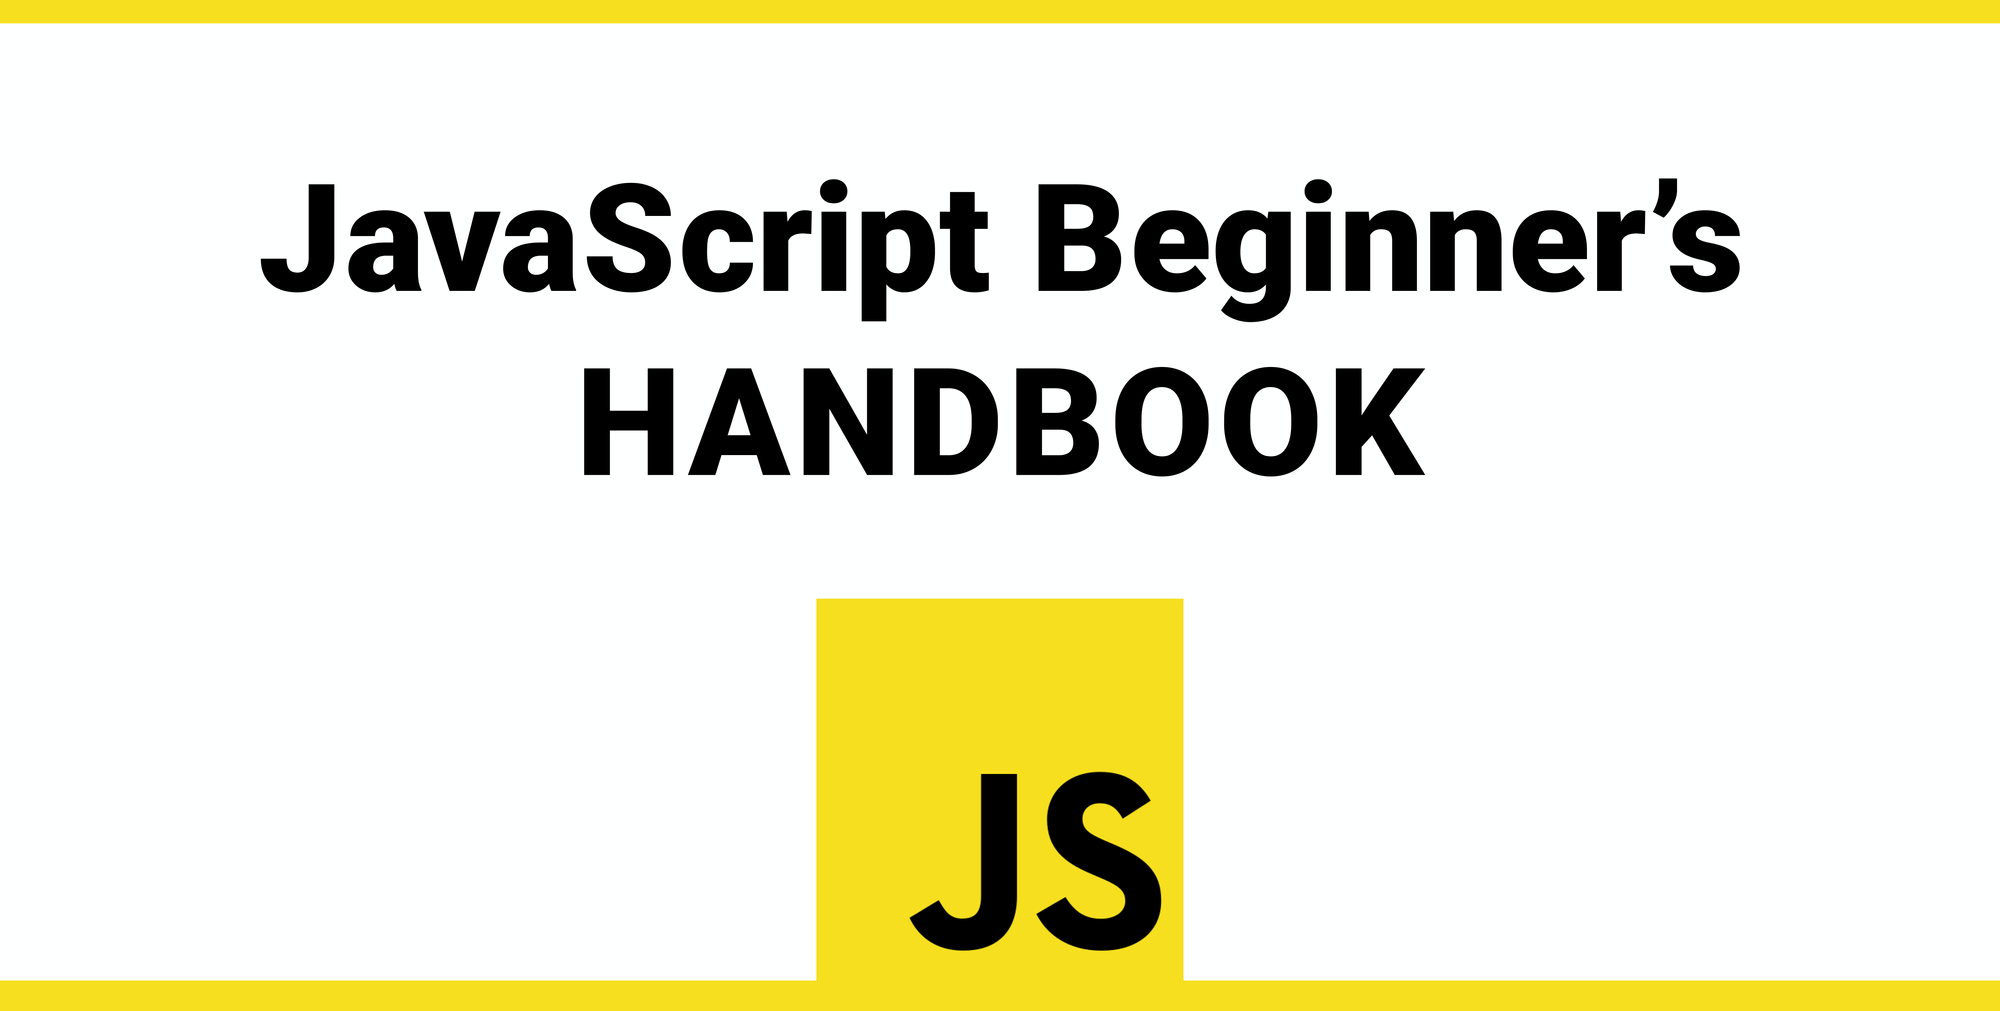 The JavaScript Beginner's Handbook (2020 Edition)